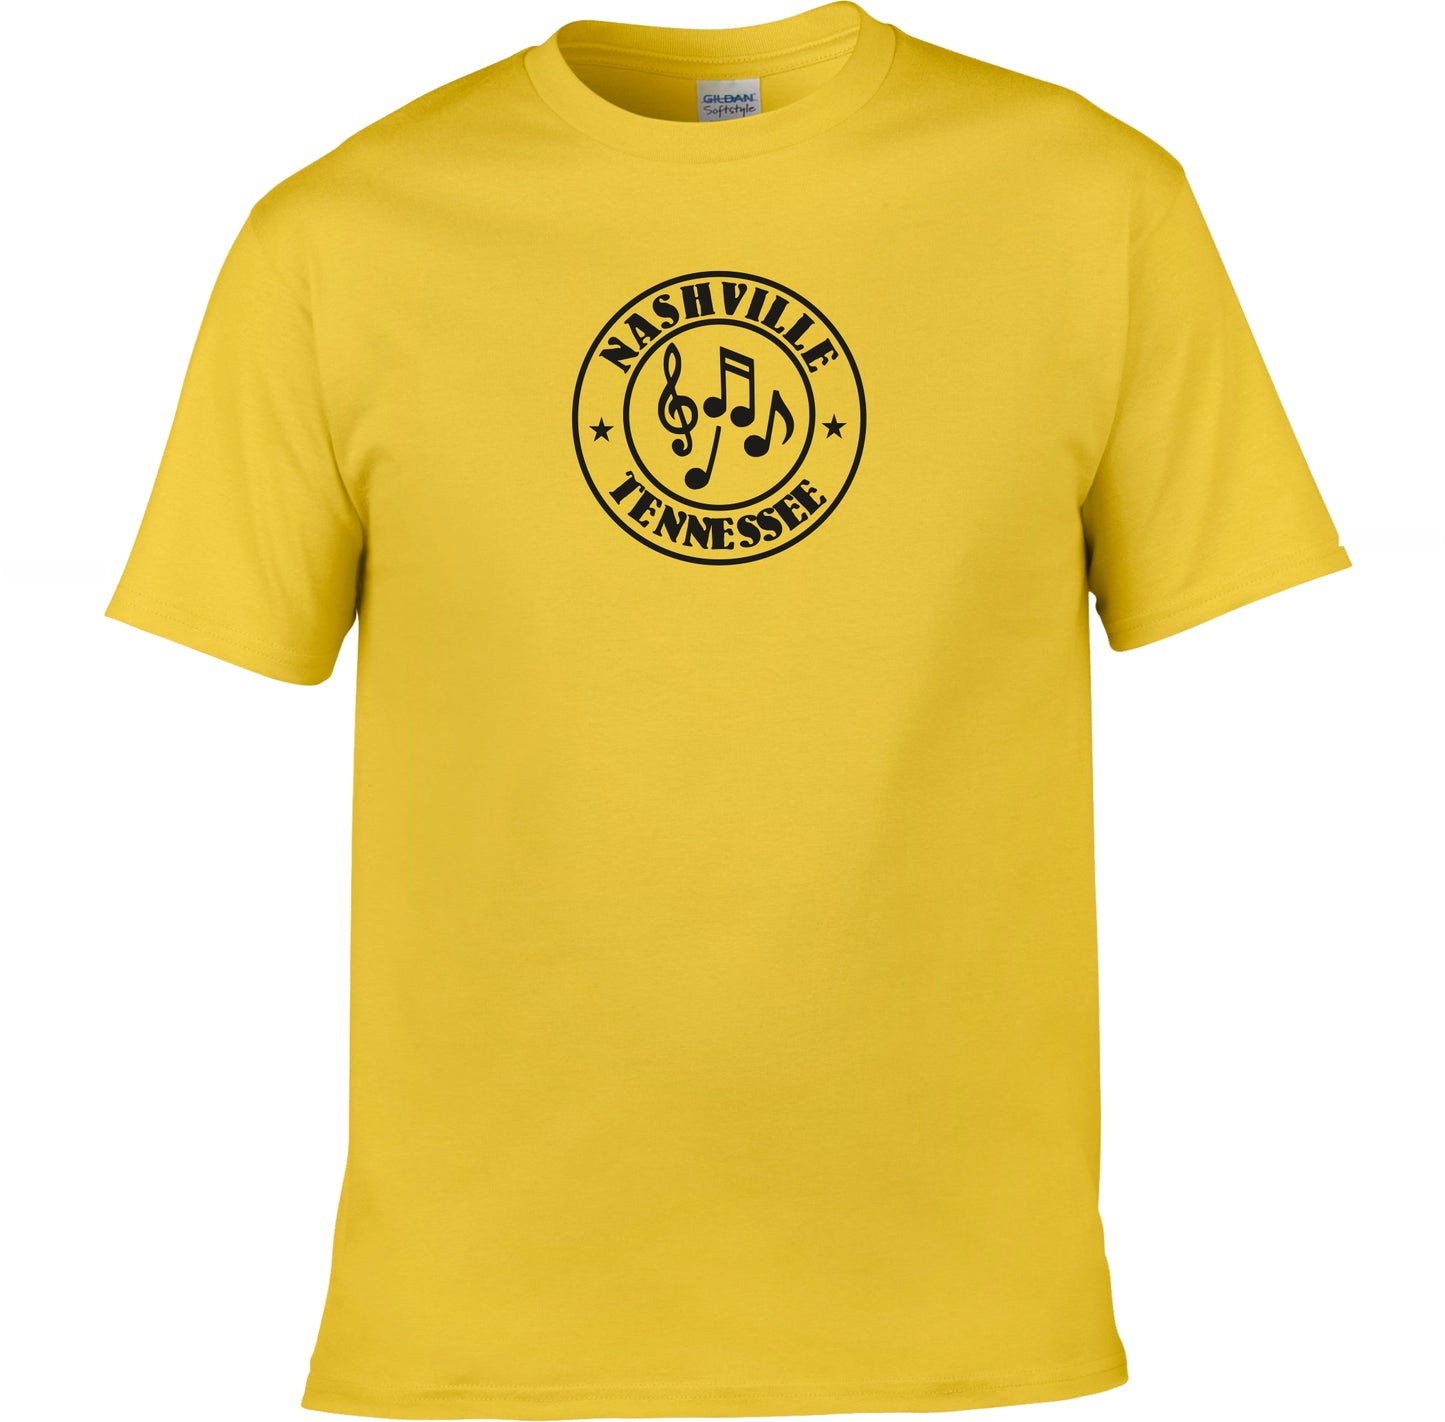 Nashville T-Shirt - Tennessee, USA Souvenir, Music Notes, Various Colours